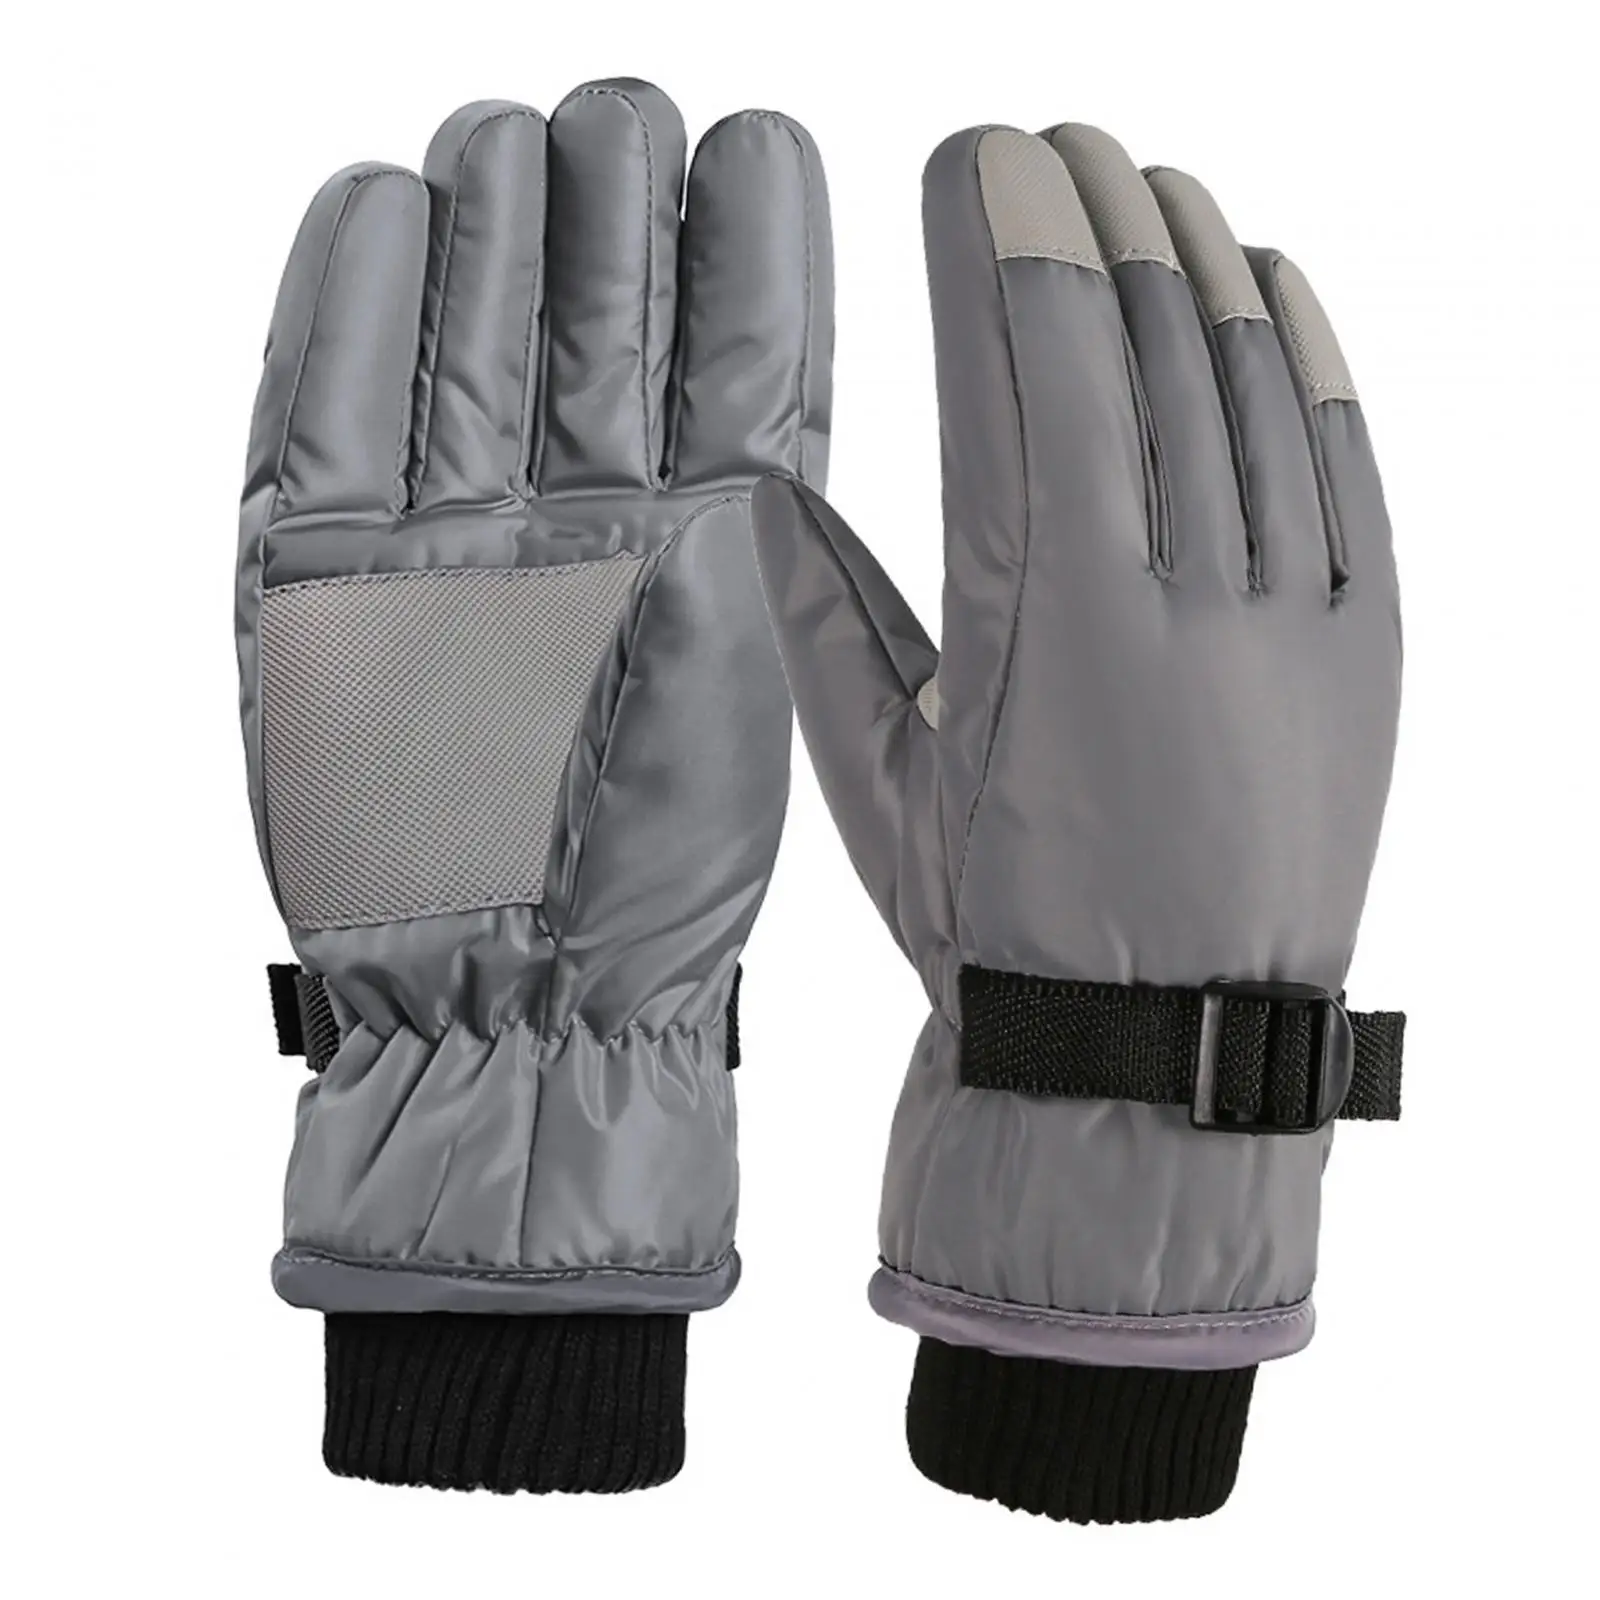 Winter Kids Gloves Mittens Waterproof Ski Gloves Gloves for Cold Weather for Children Girls Boys Hiking Snowboarding Skiing